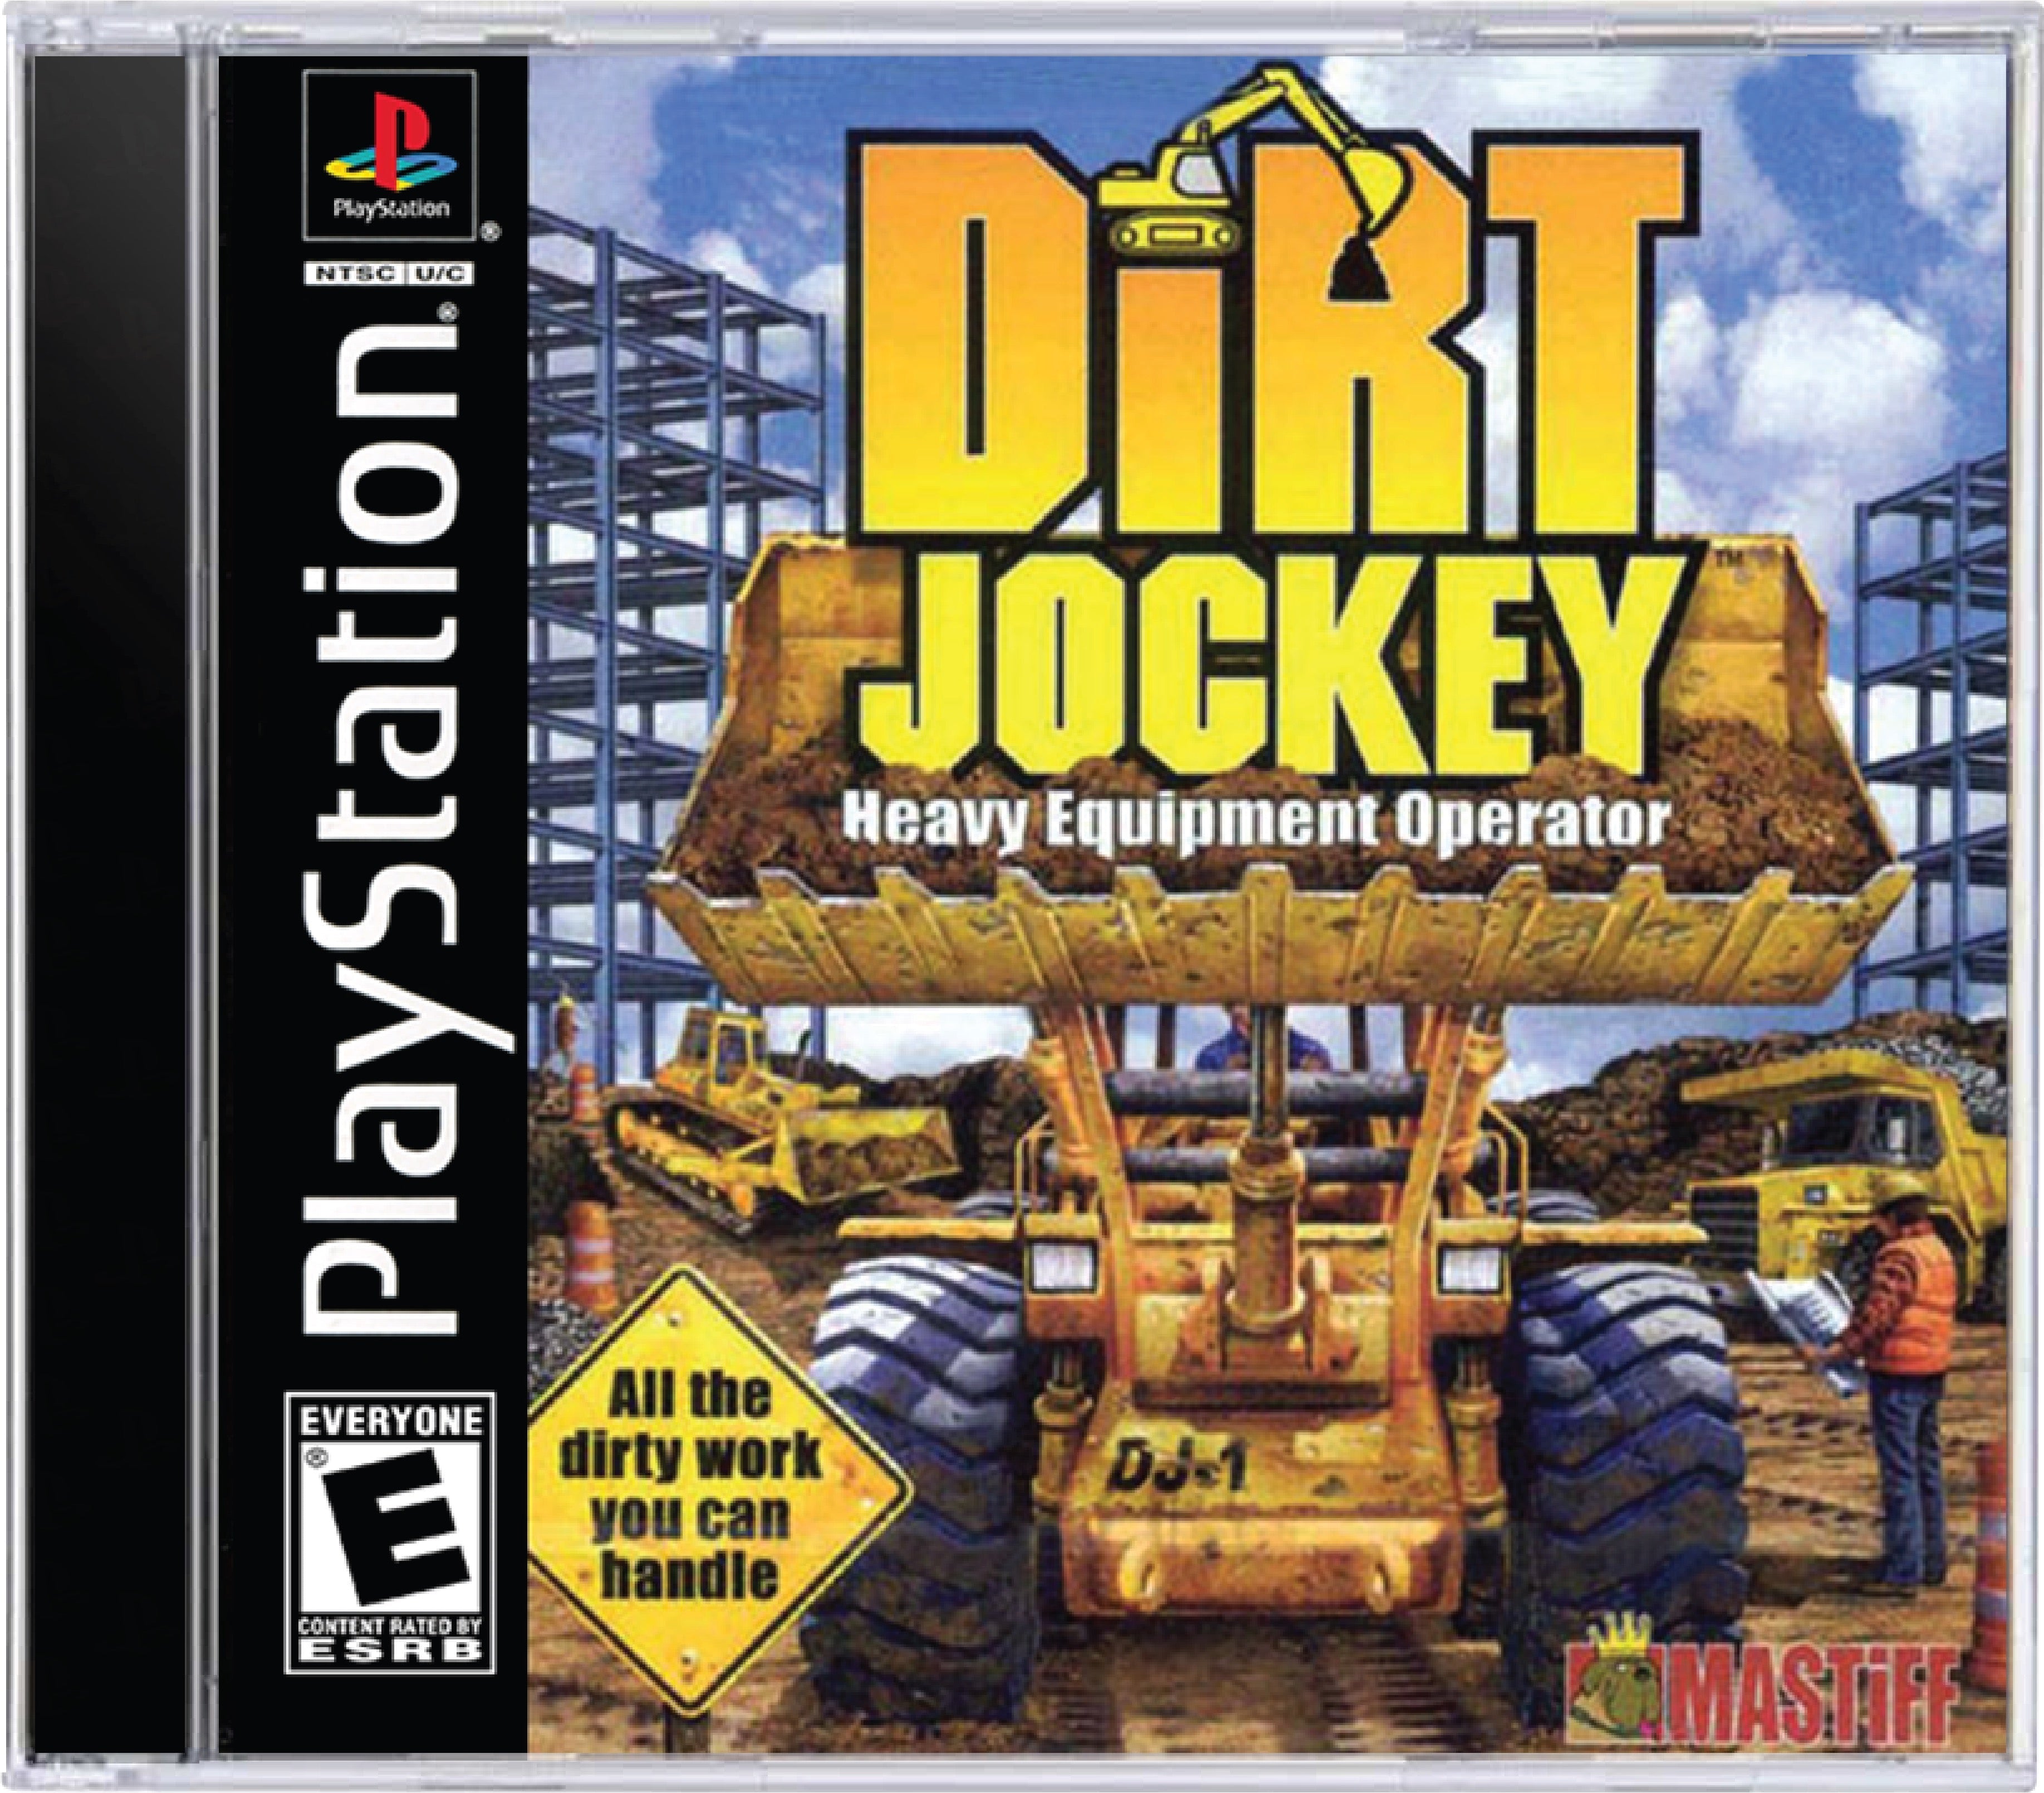 Dirt Jockey Heavy Equipment Operator Cover Art and Product Photo